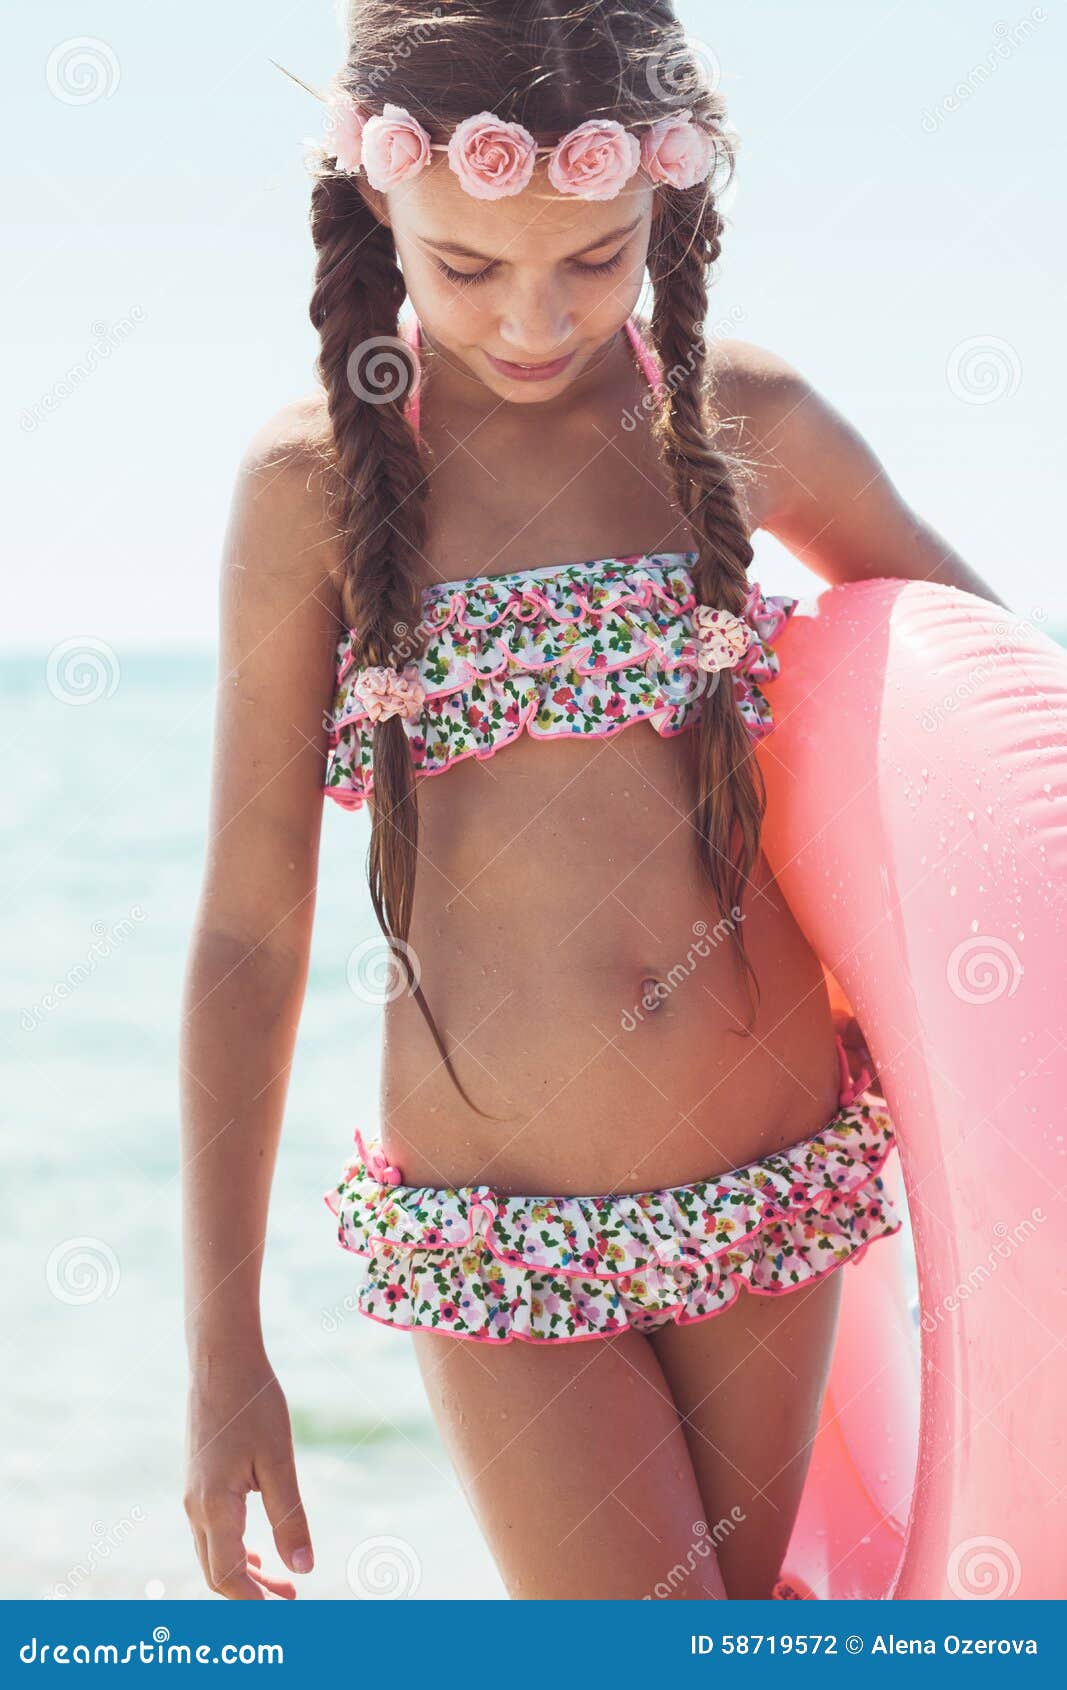 fashion child at the beach